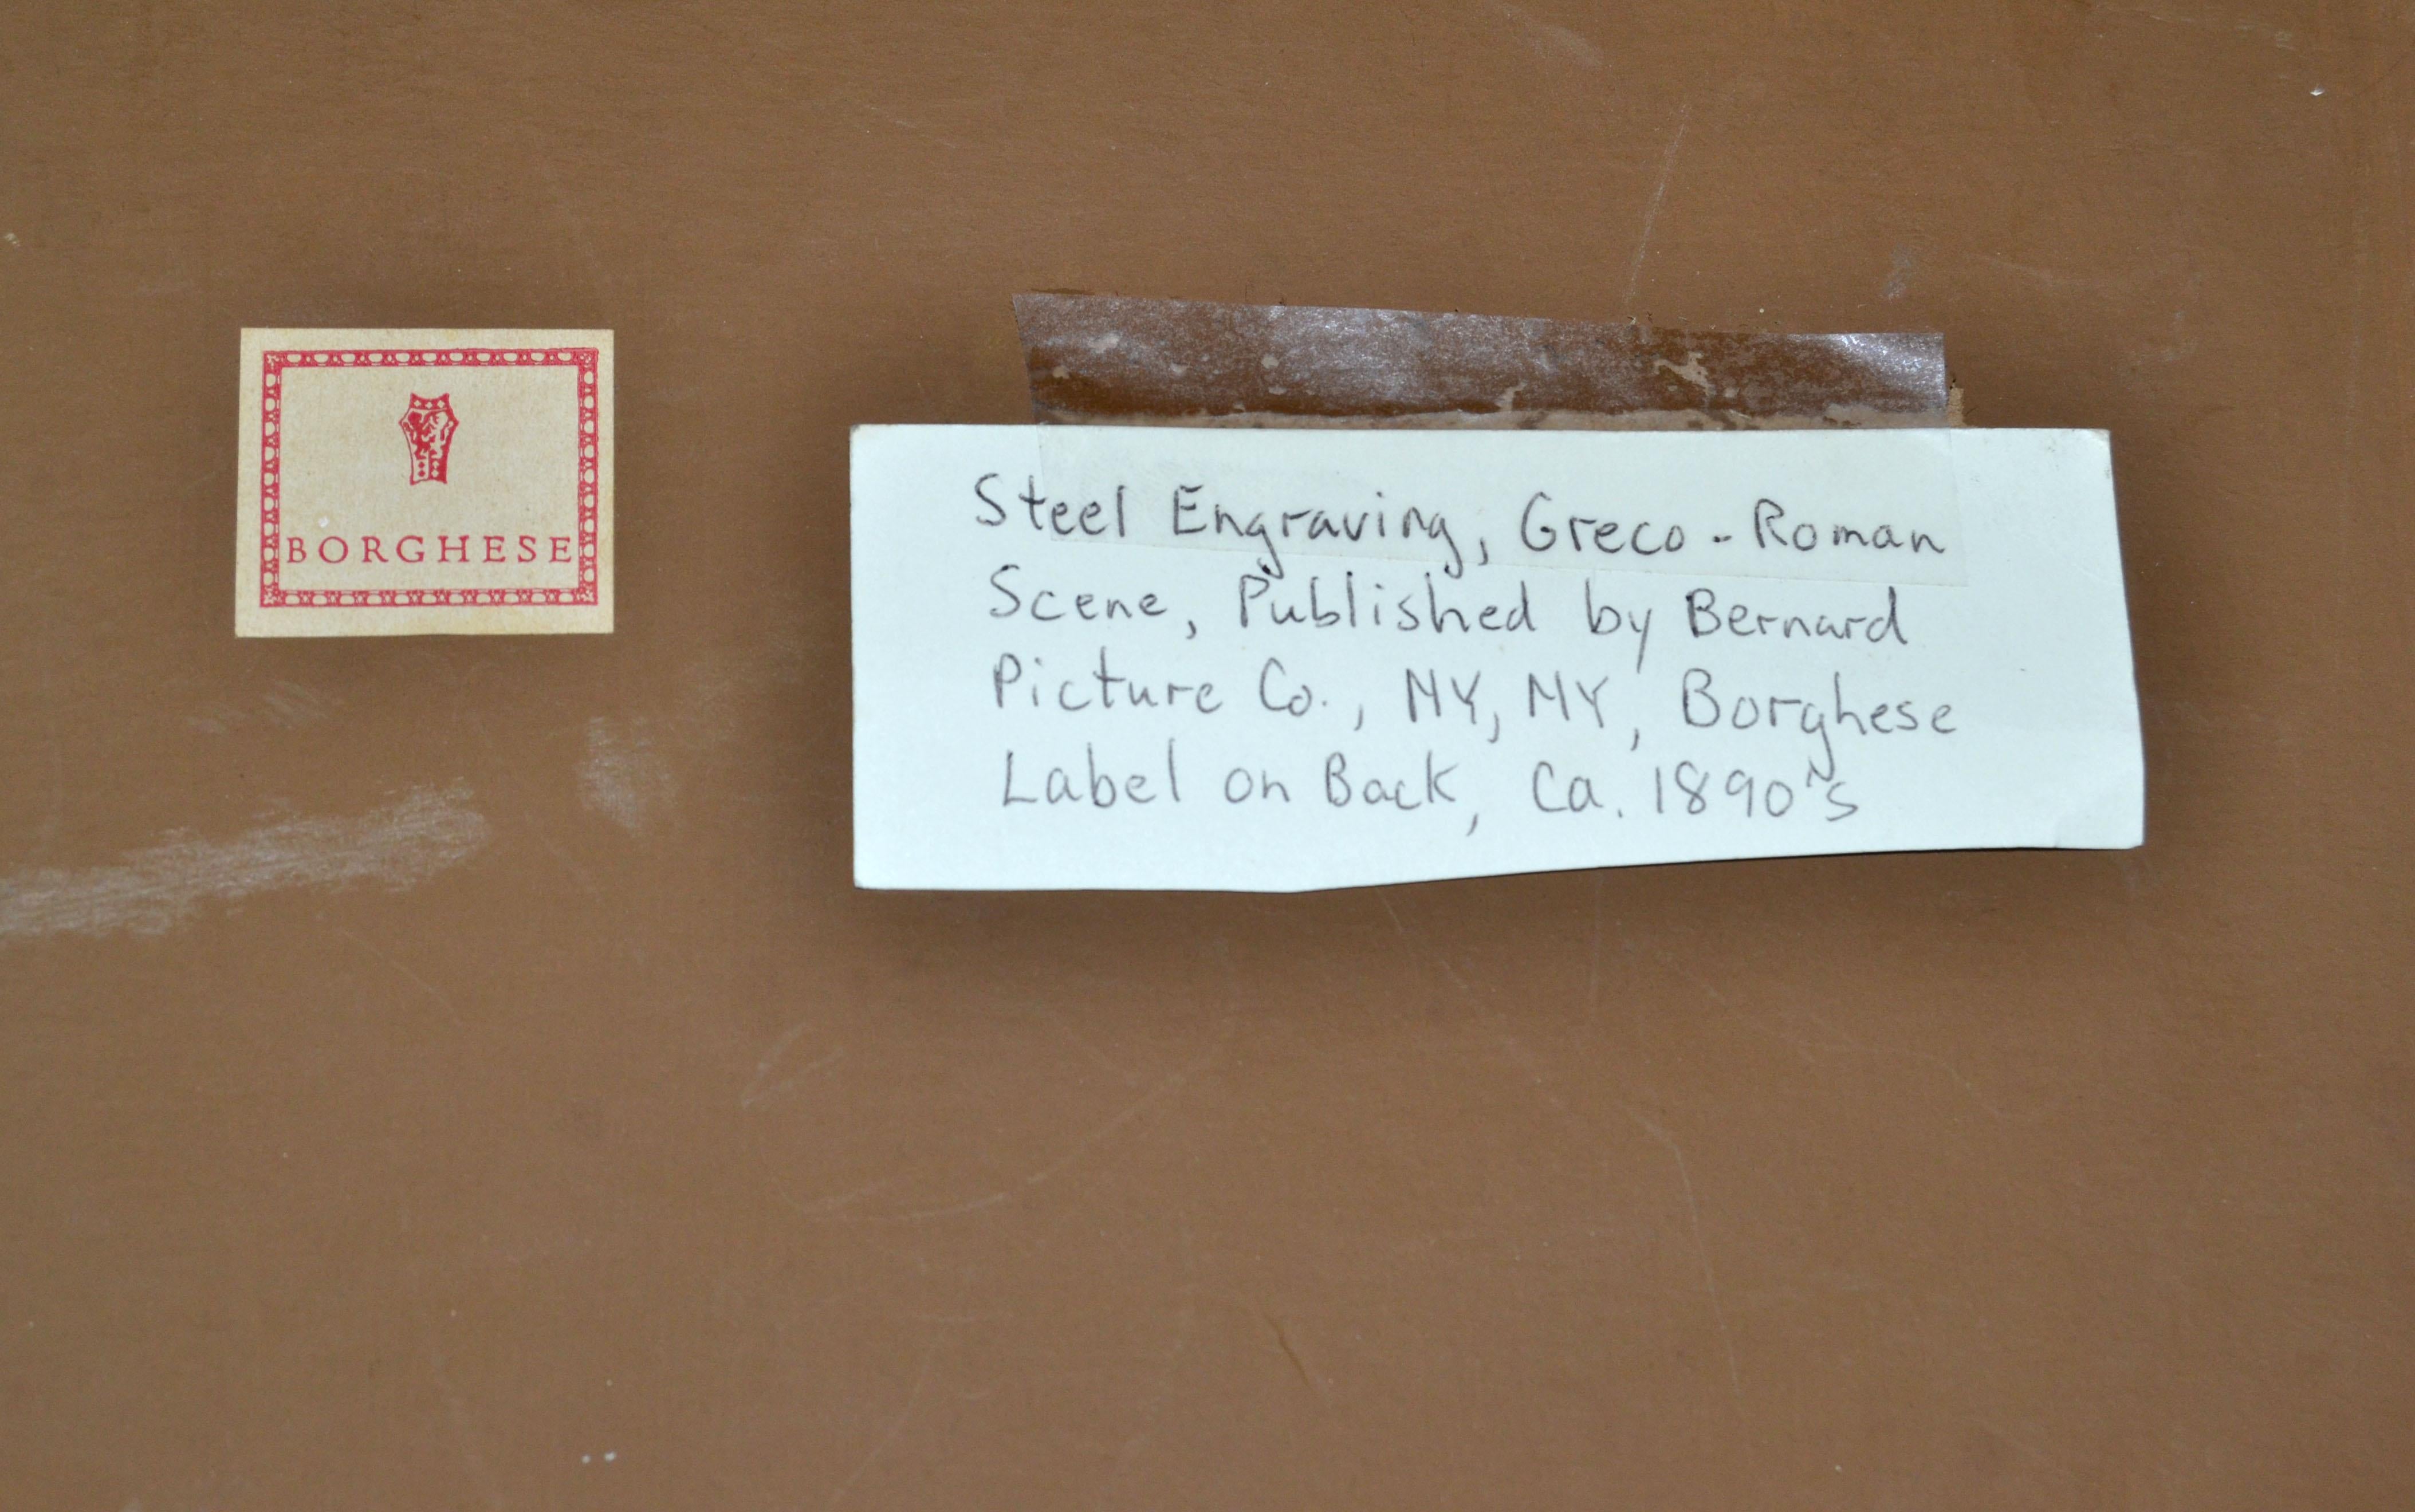 Borghese 1890 Steel Engraving Greco Roman Scene Bernard Picture Co. New York For Sale 4